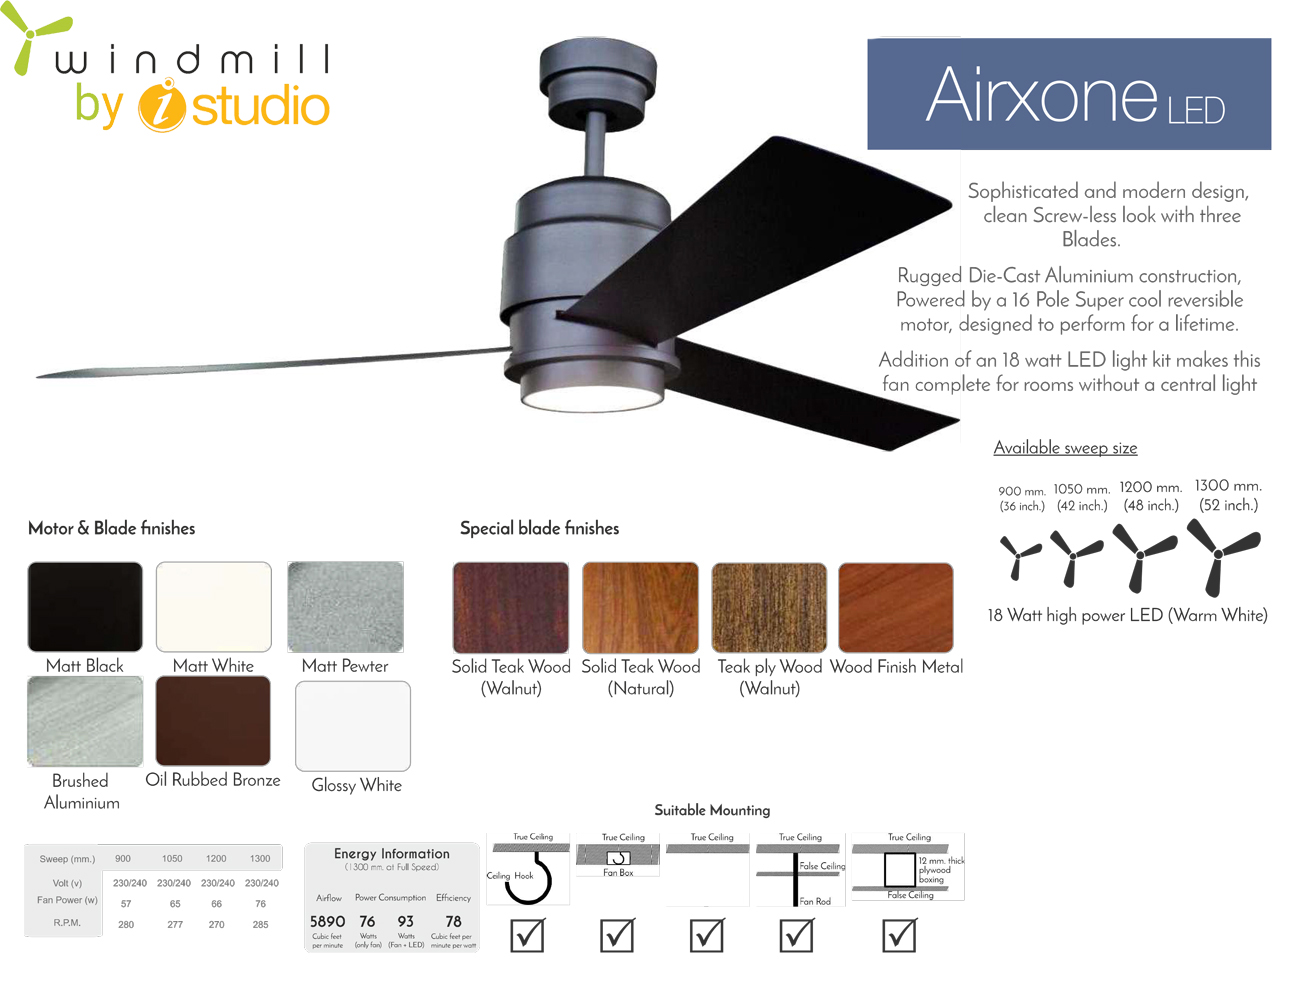 Windmill Airxone LED 52